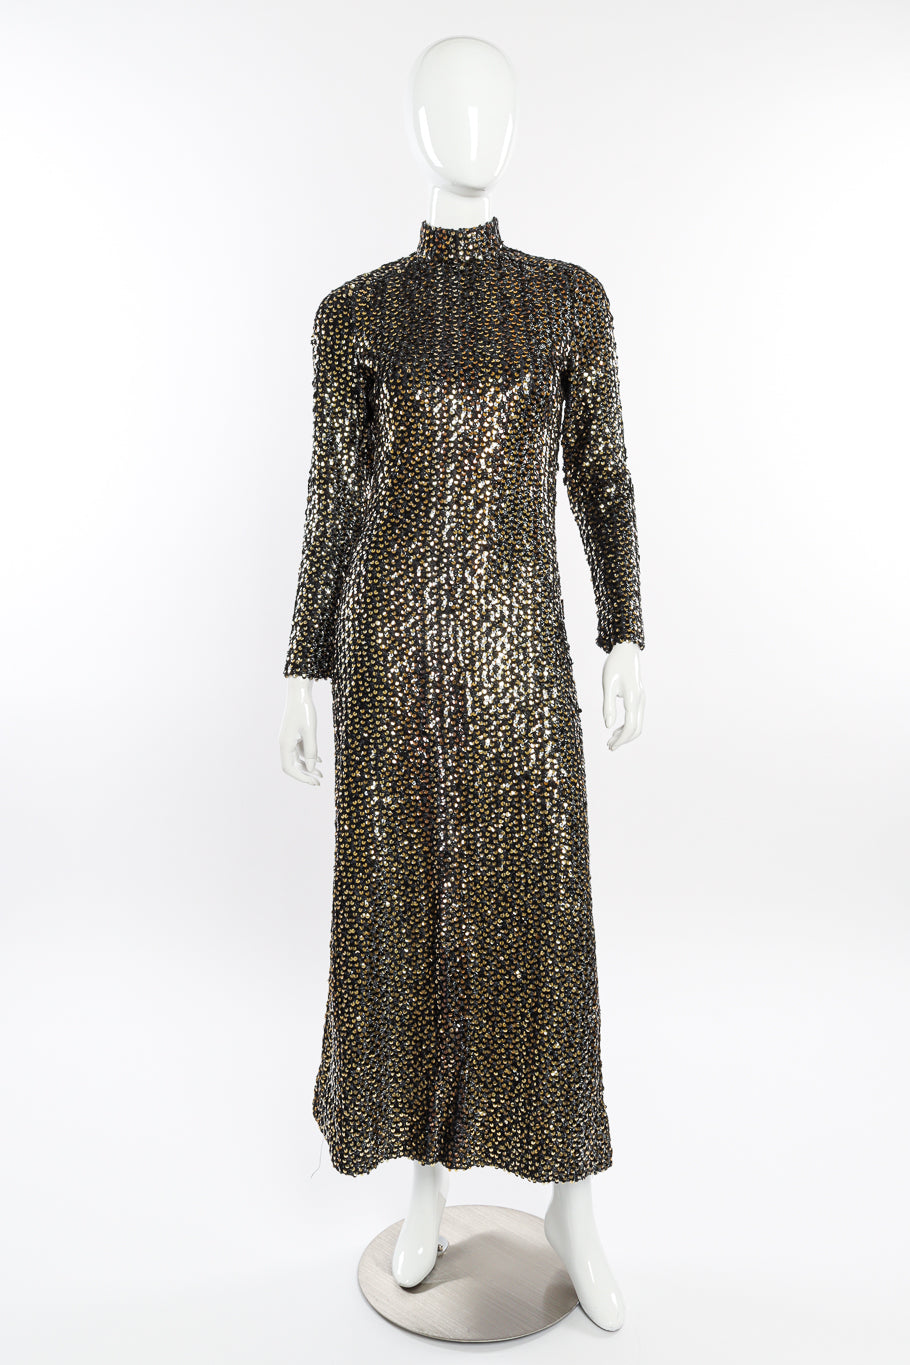 Vintage Anthony Muto Sequin Lamé Sheath Dress front on mannequin @recessla